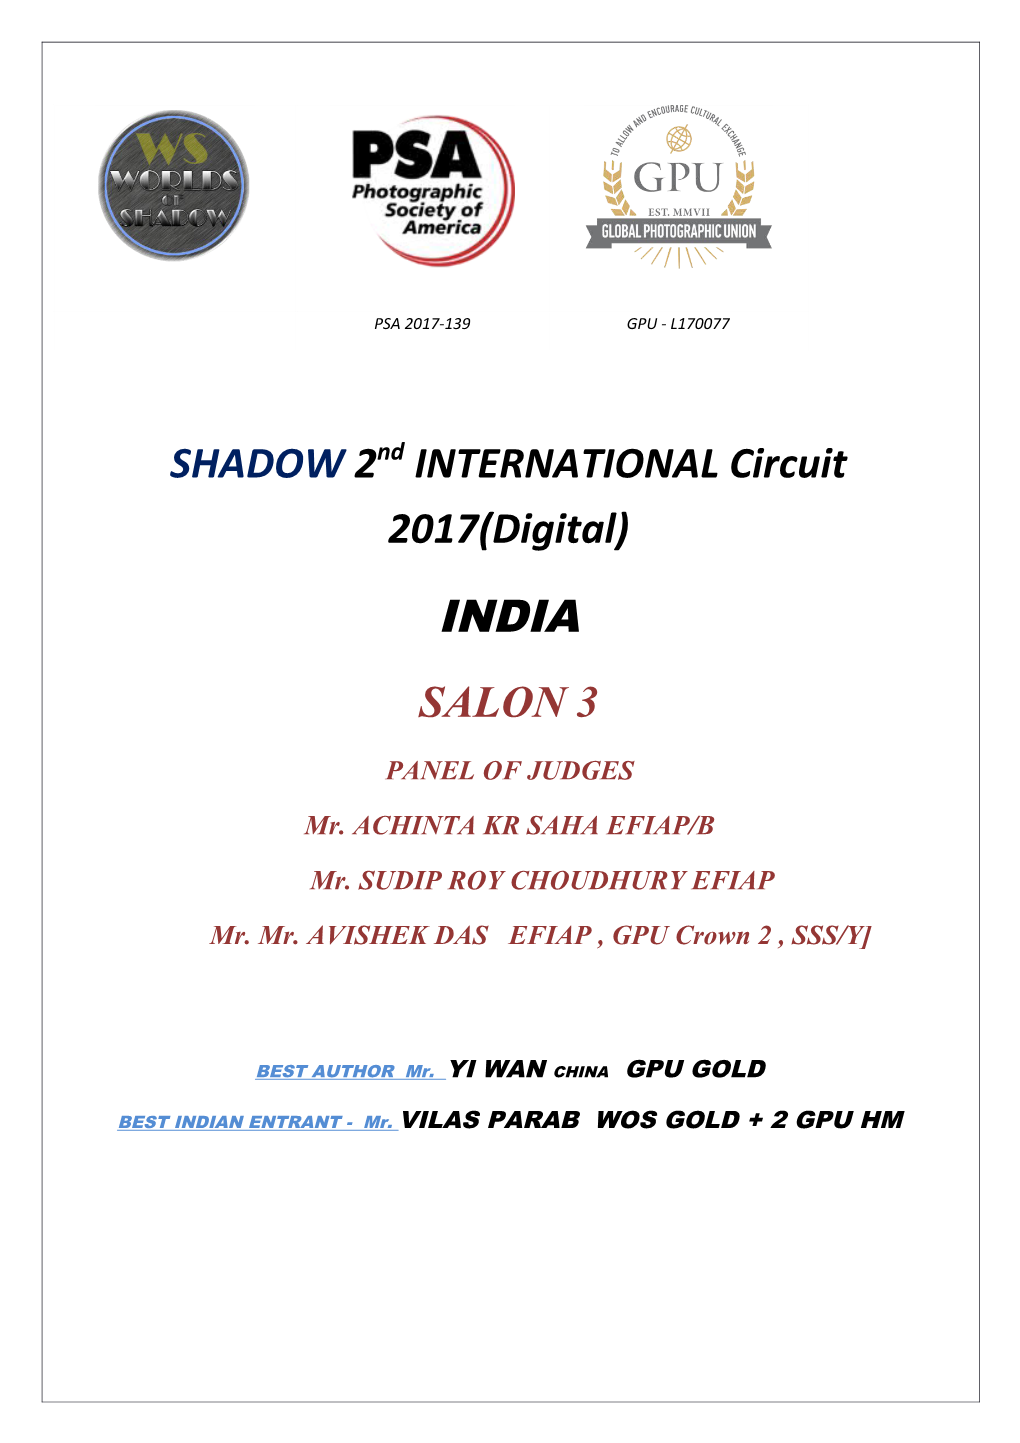 Shadow2nd INTERNATIONAL Circuit 2017(Digital)